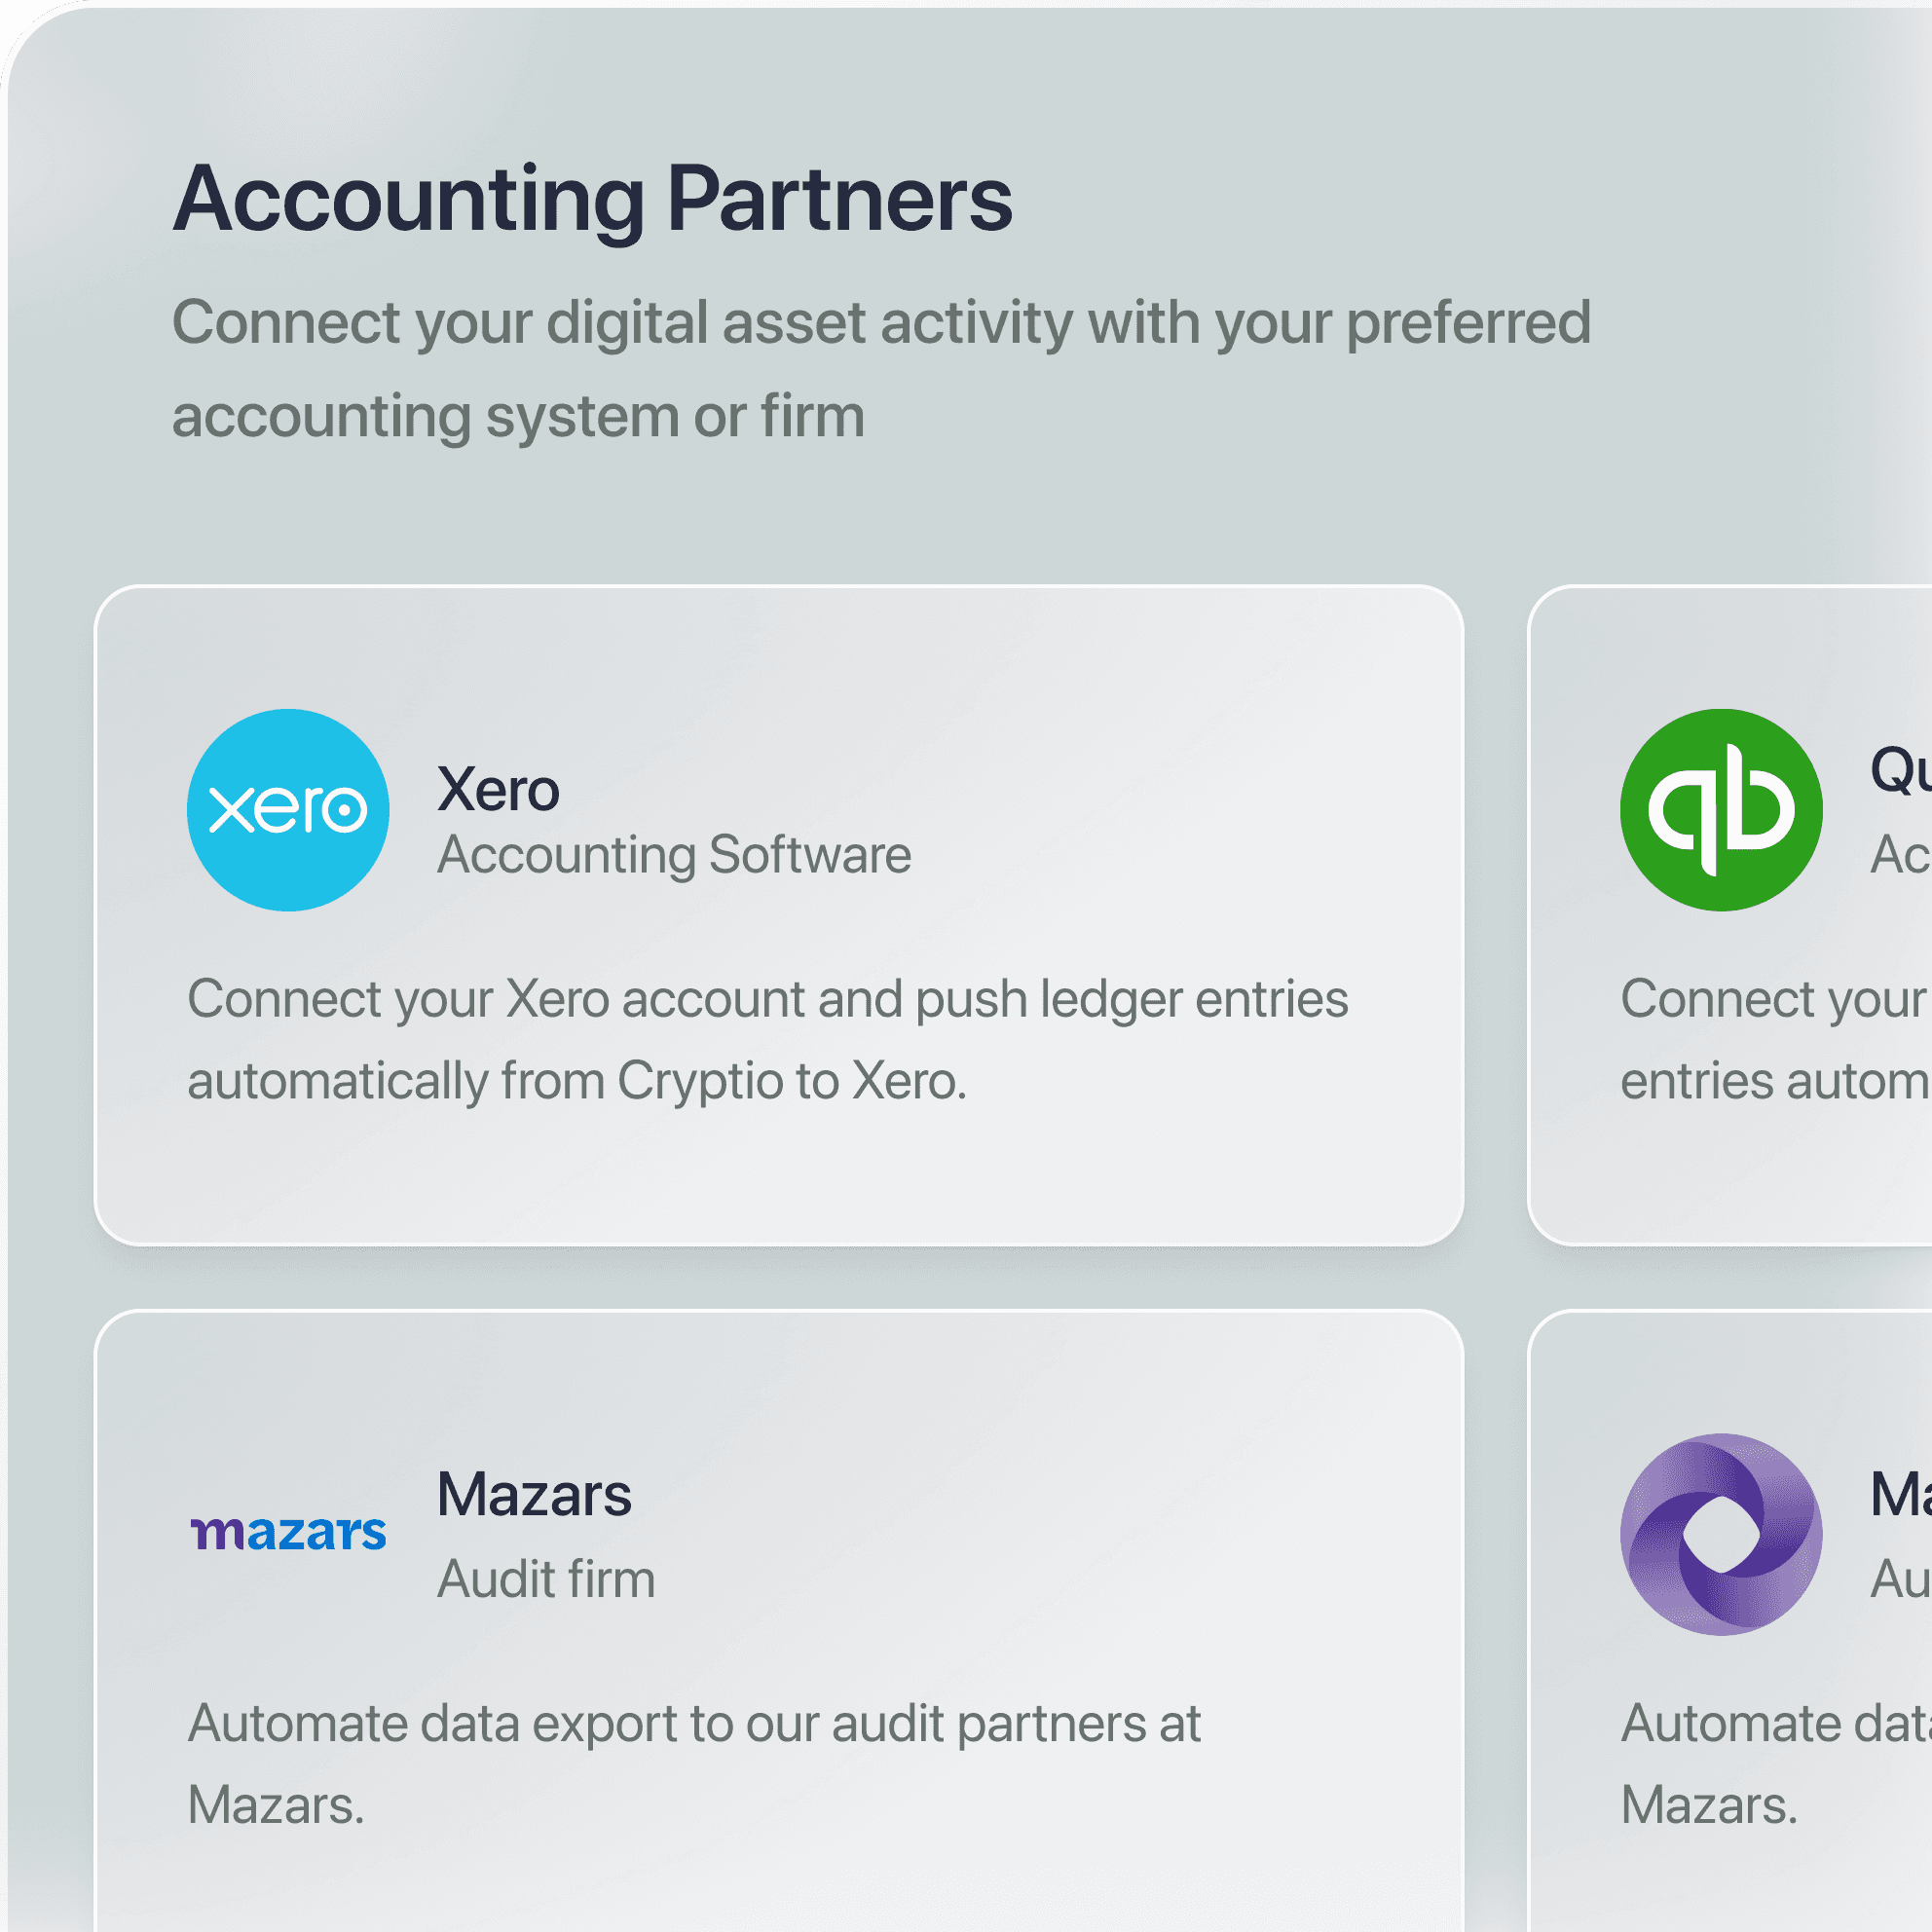 Some accounting partners of Cryptio: Xero, Quickbooks, Mazars...